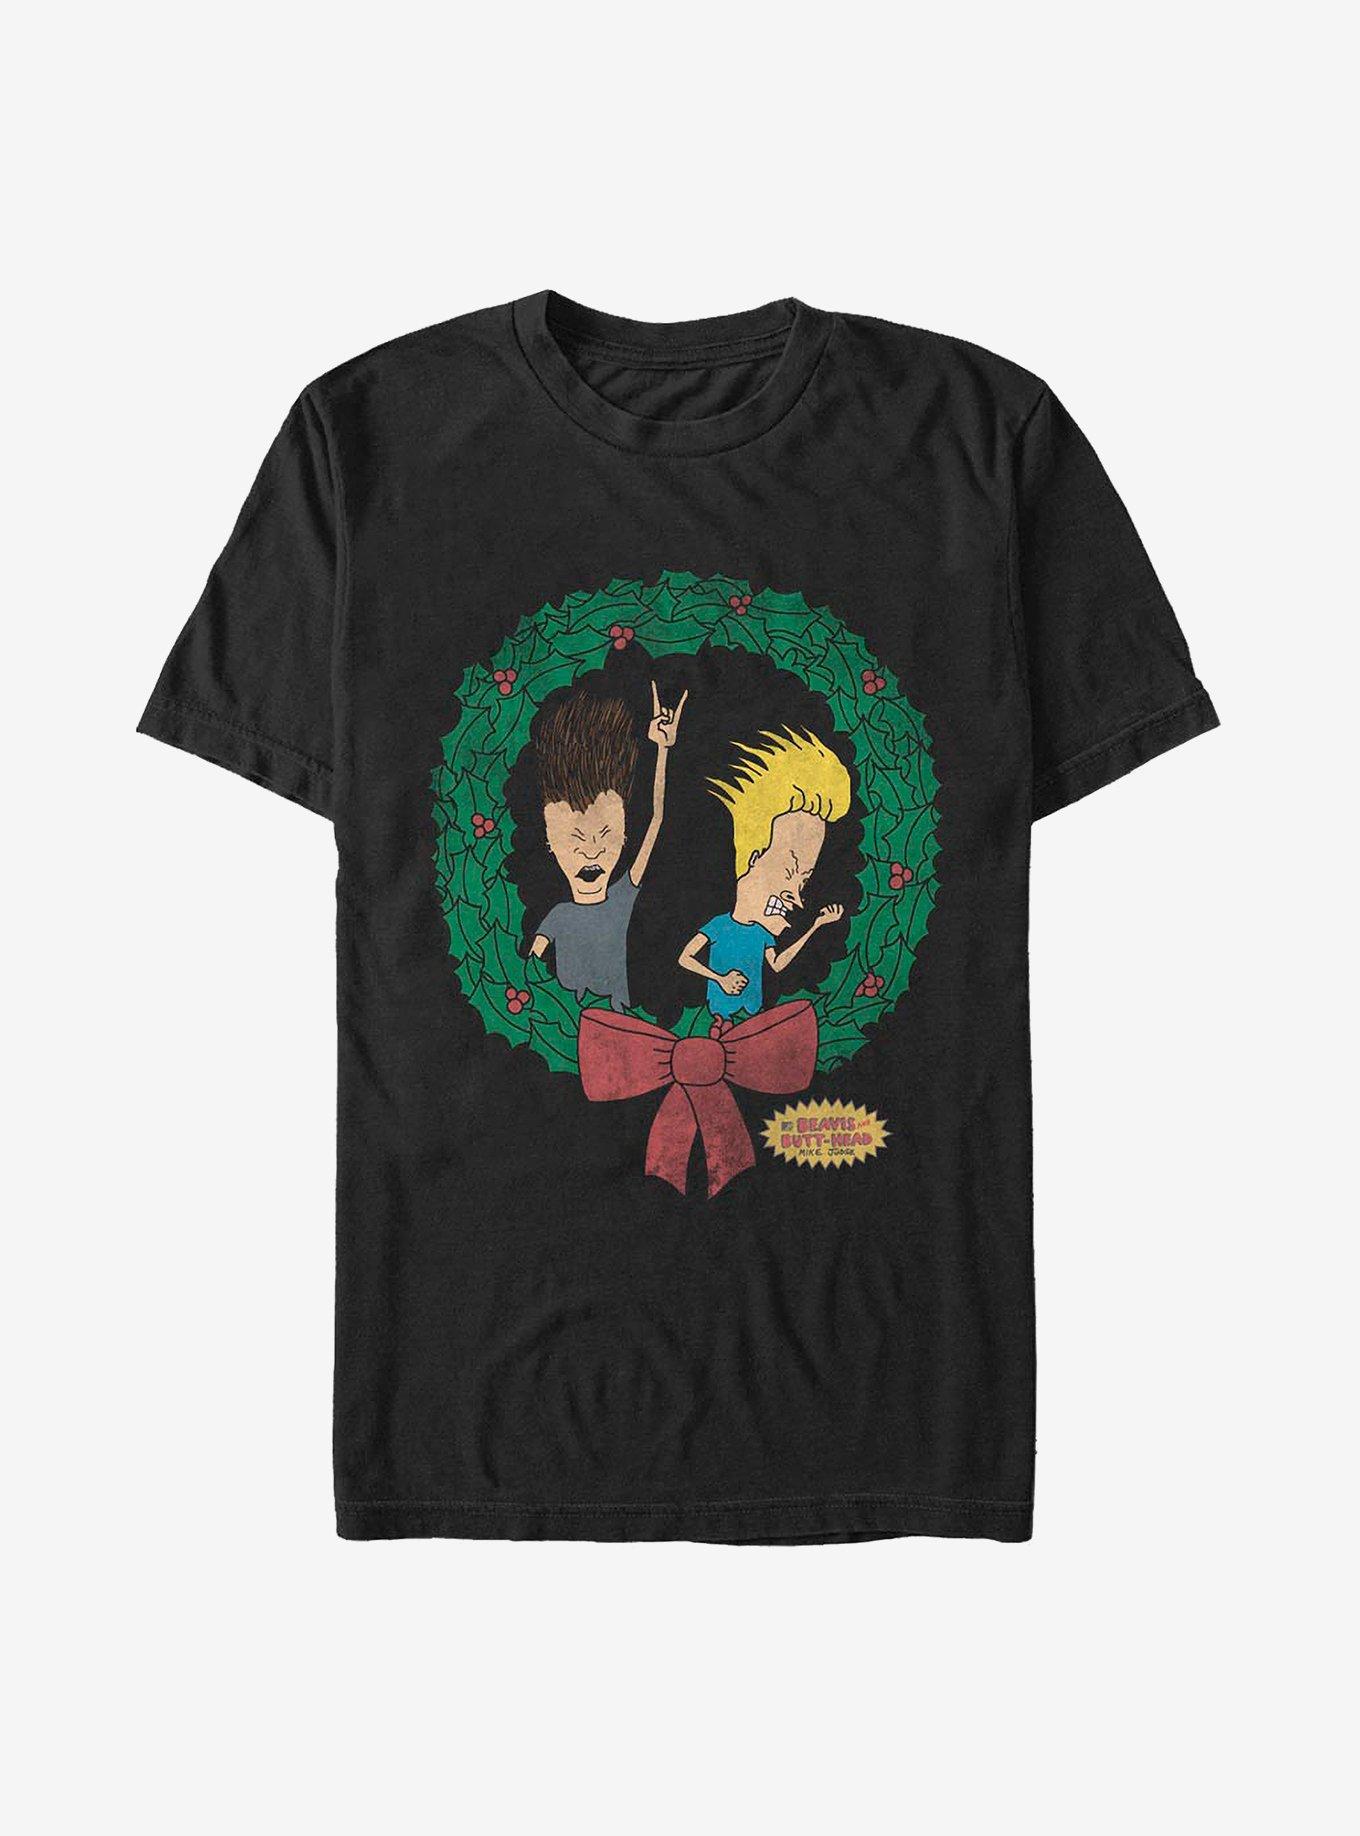 Beavis And Butthead Holiday Spirit T-Shirt, , hi-res